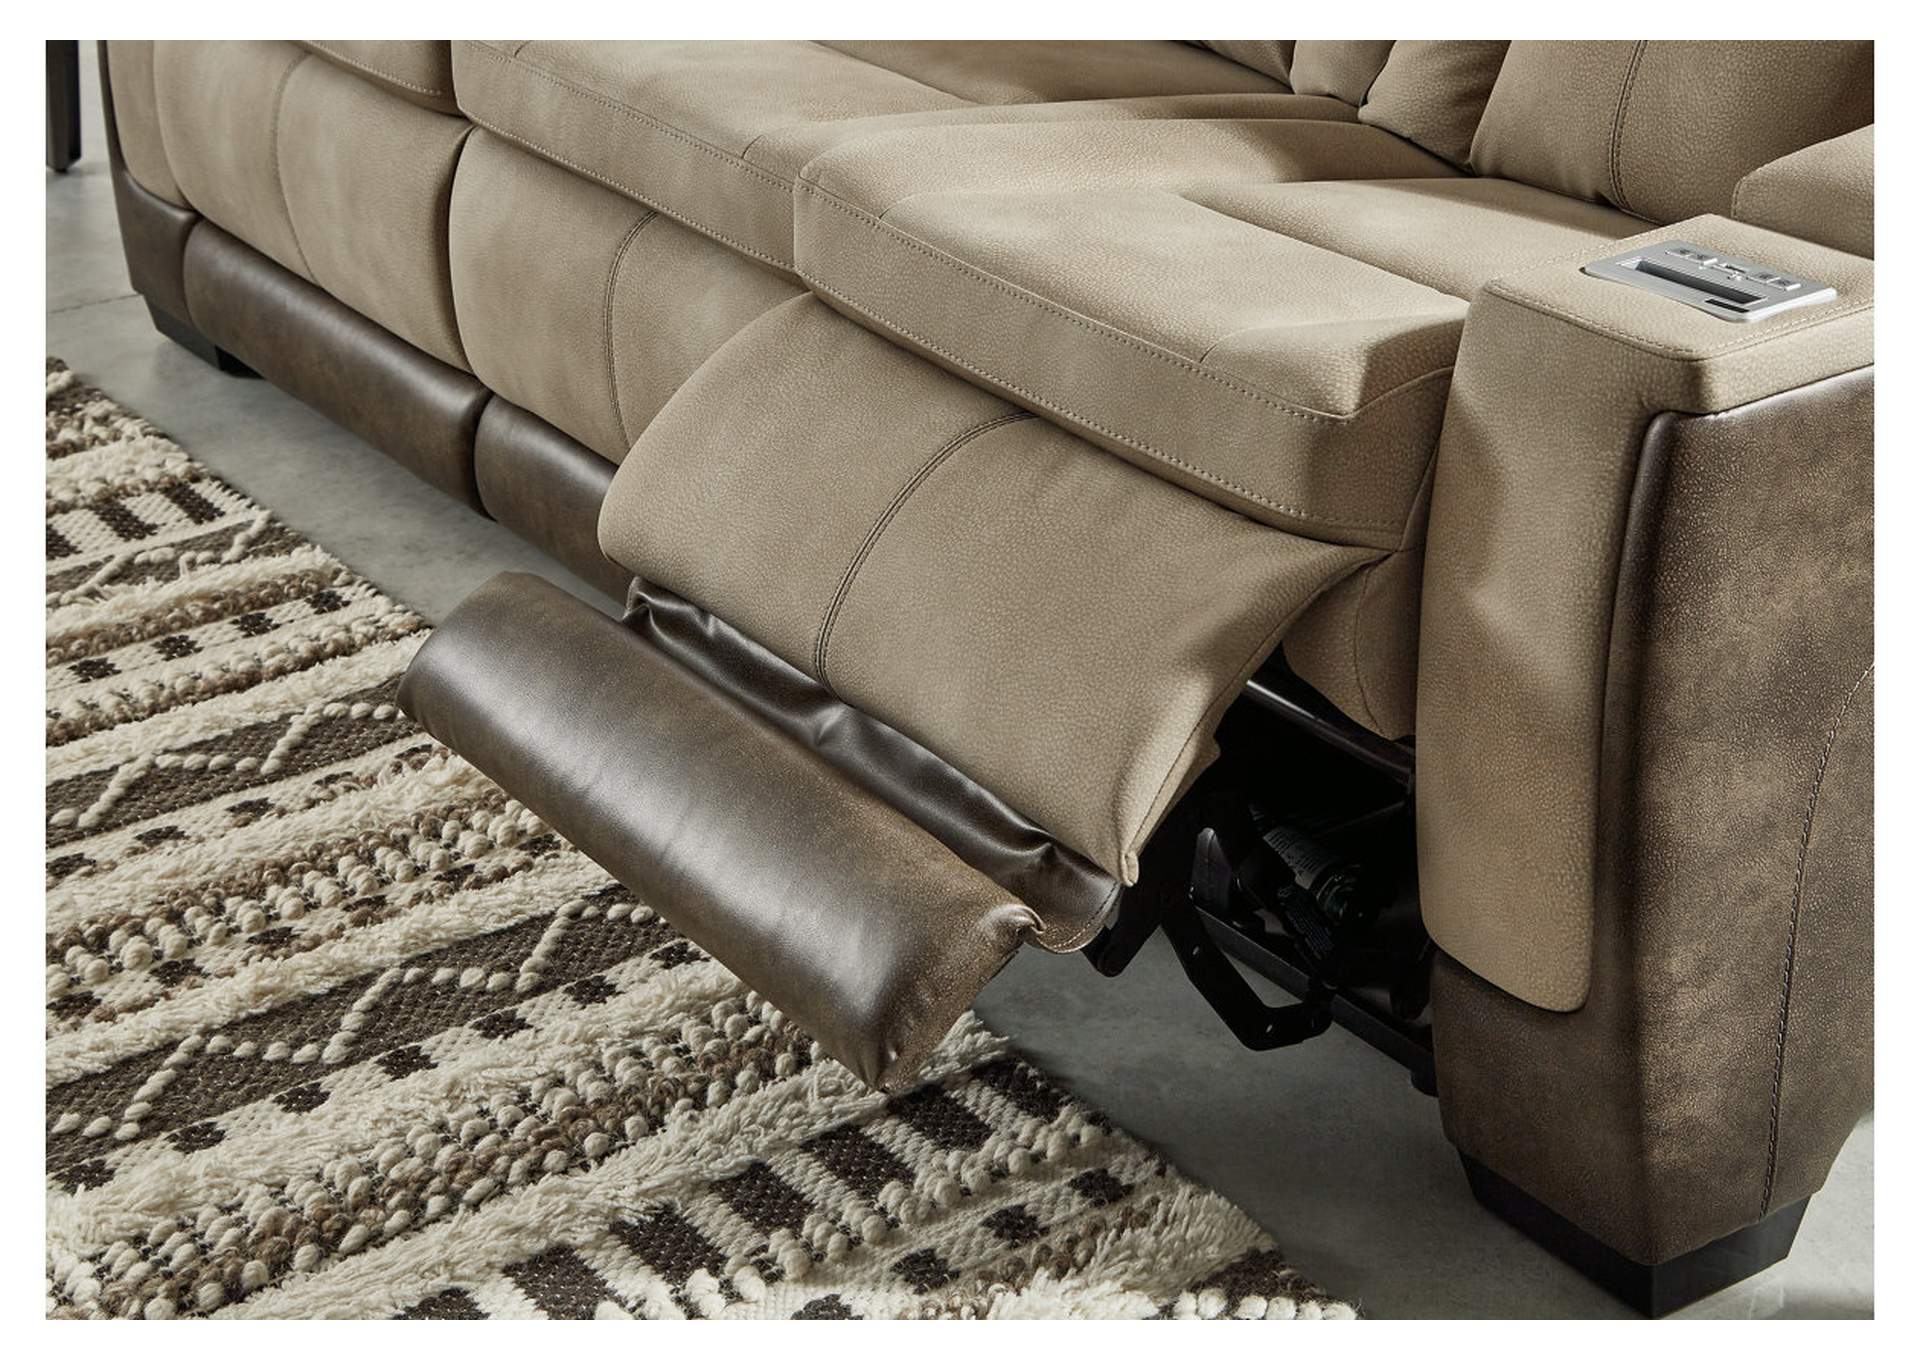 Next-Gen DuraPella Power Reclining Sofa, Loveseat and Recliner,Signature Design By Ashley